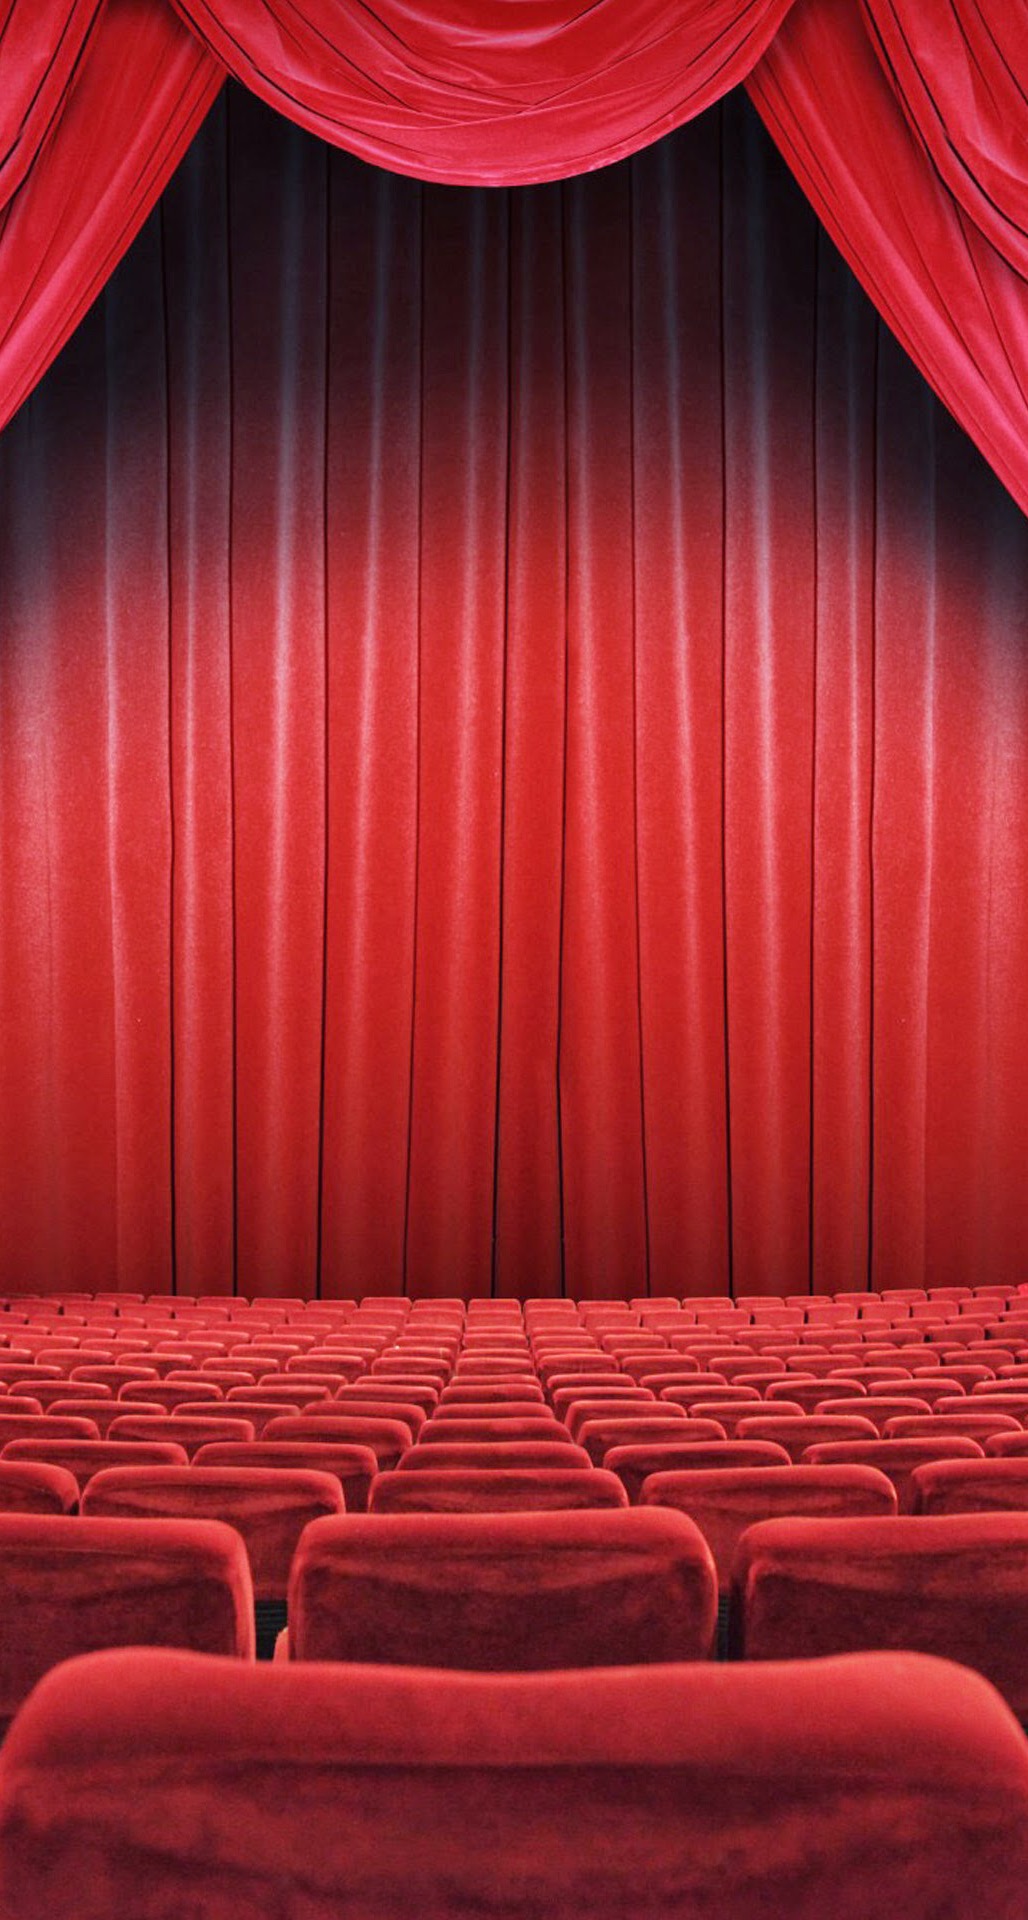 Theatre Seats Red Curtain iPhone Plus HD Wallpaper Jpg